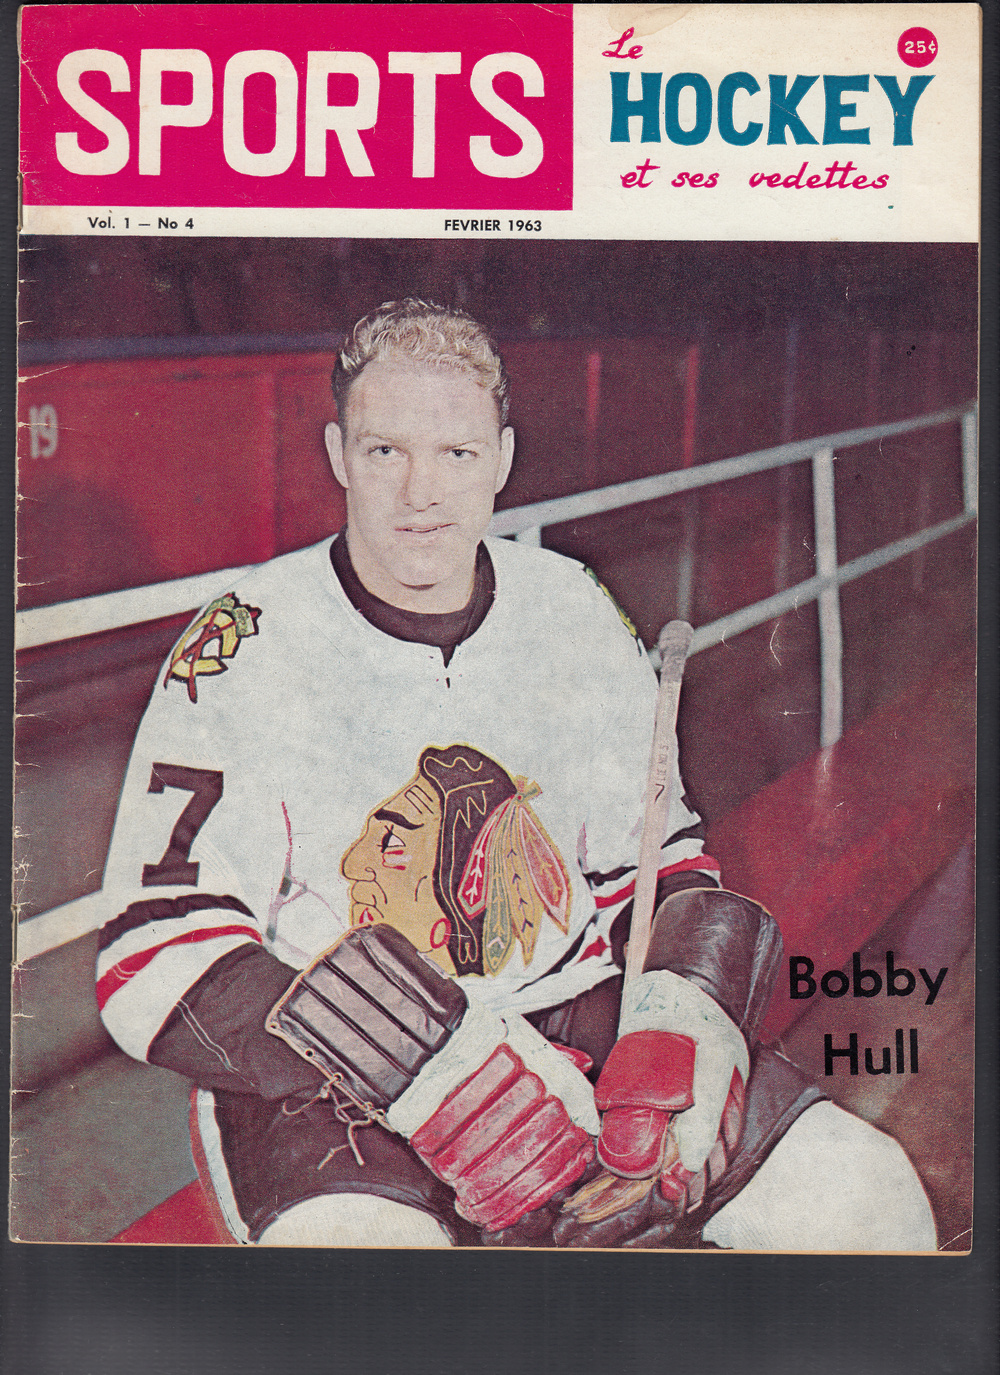 1963 SPORTS HOCKEY MAGAZINE B. HULL ON COVER photo